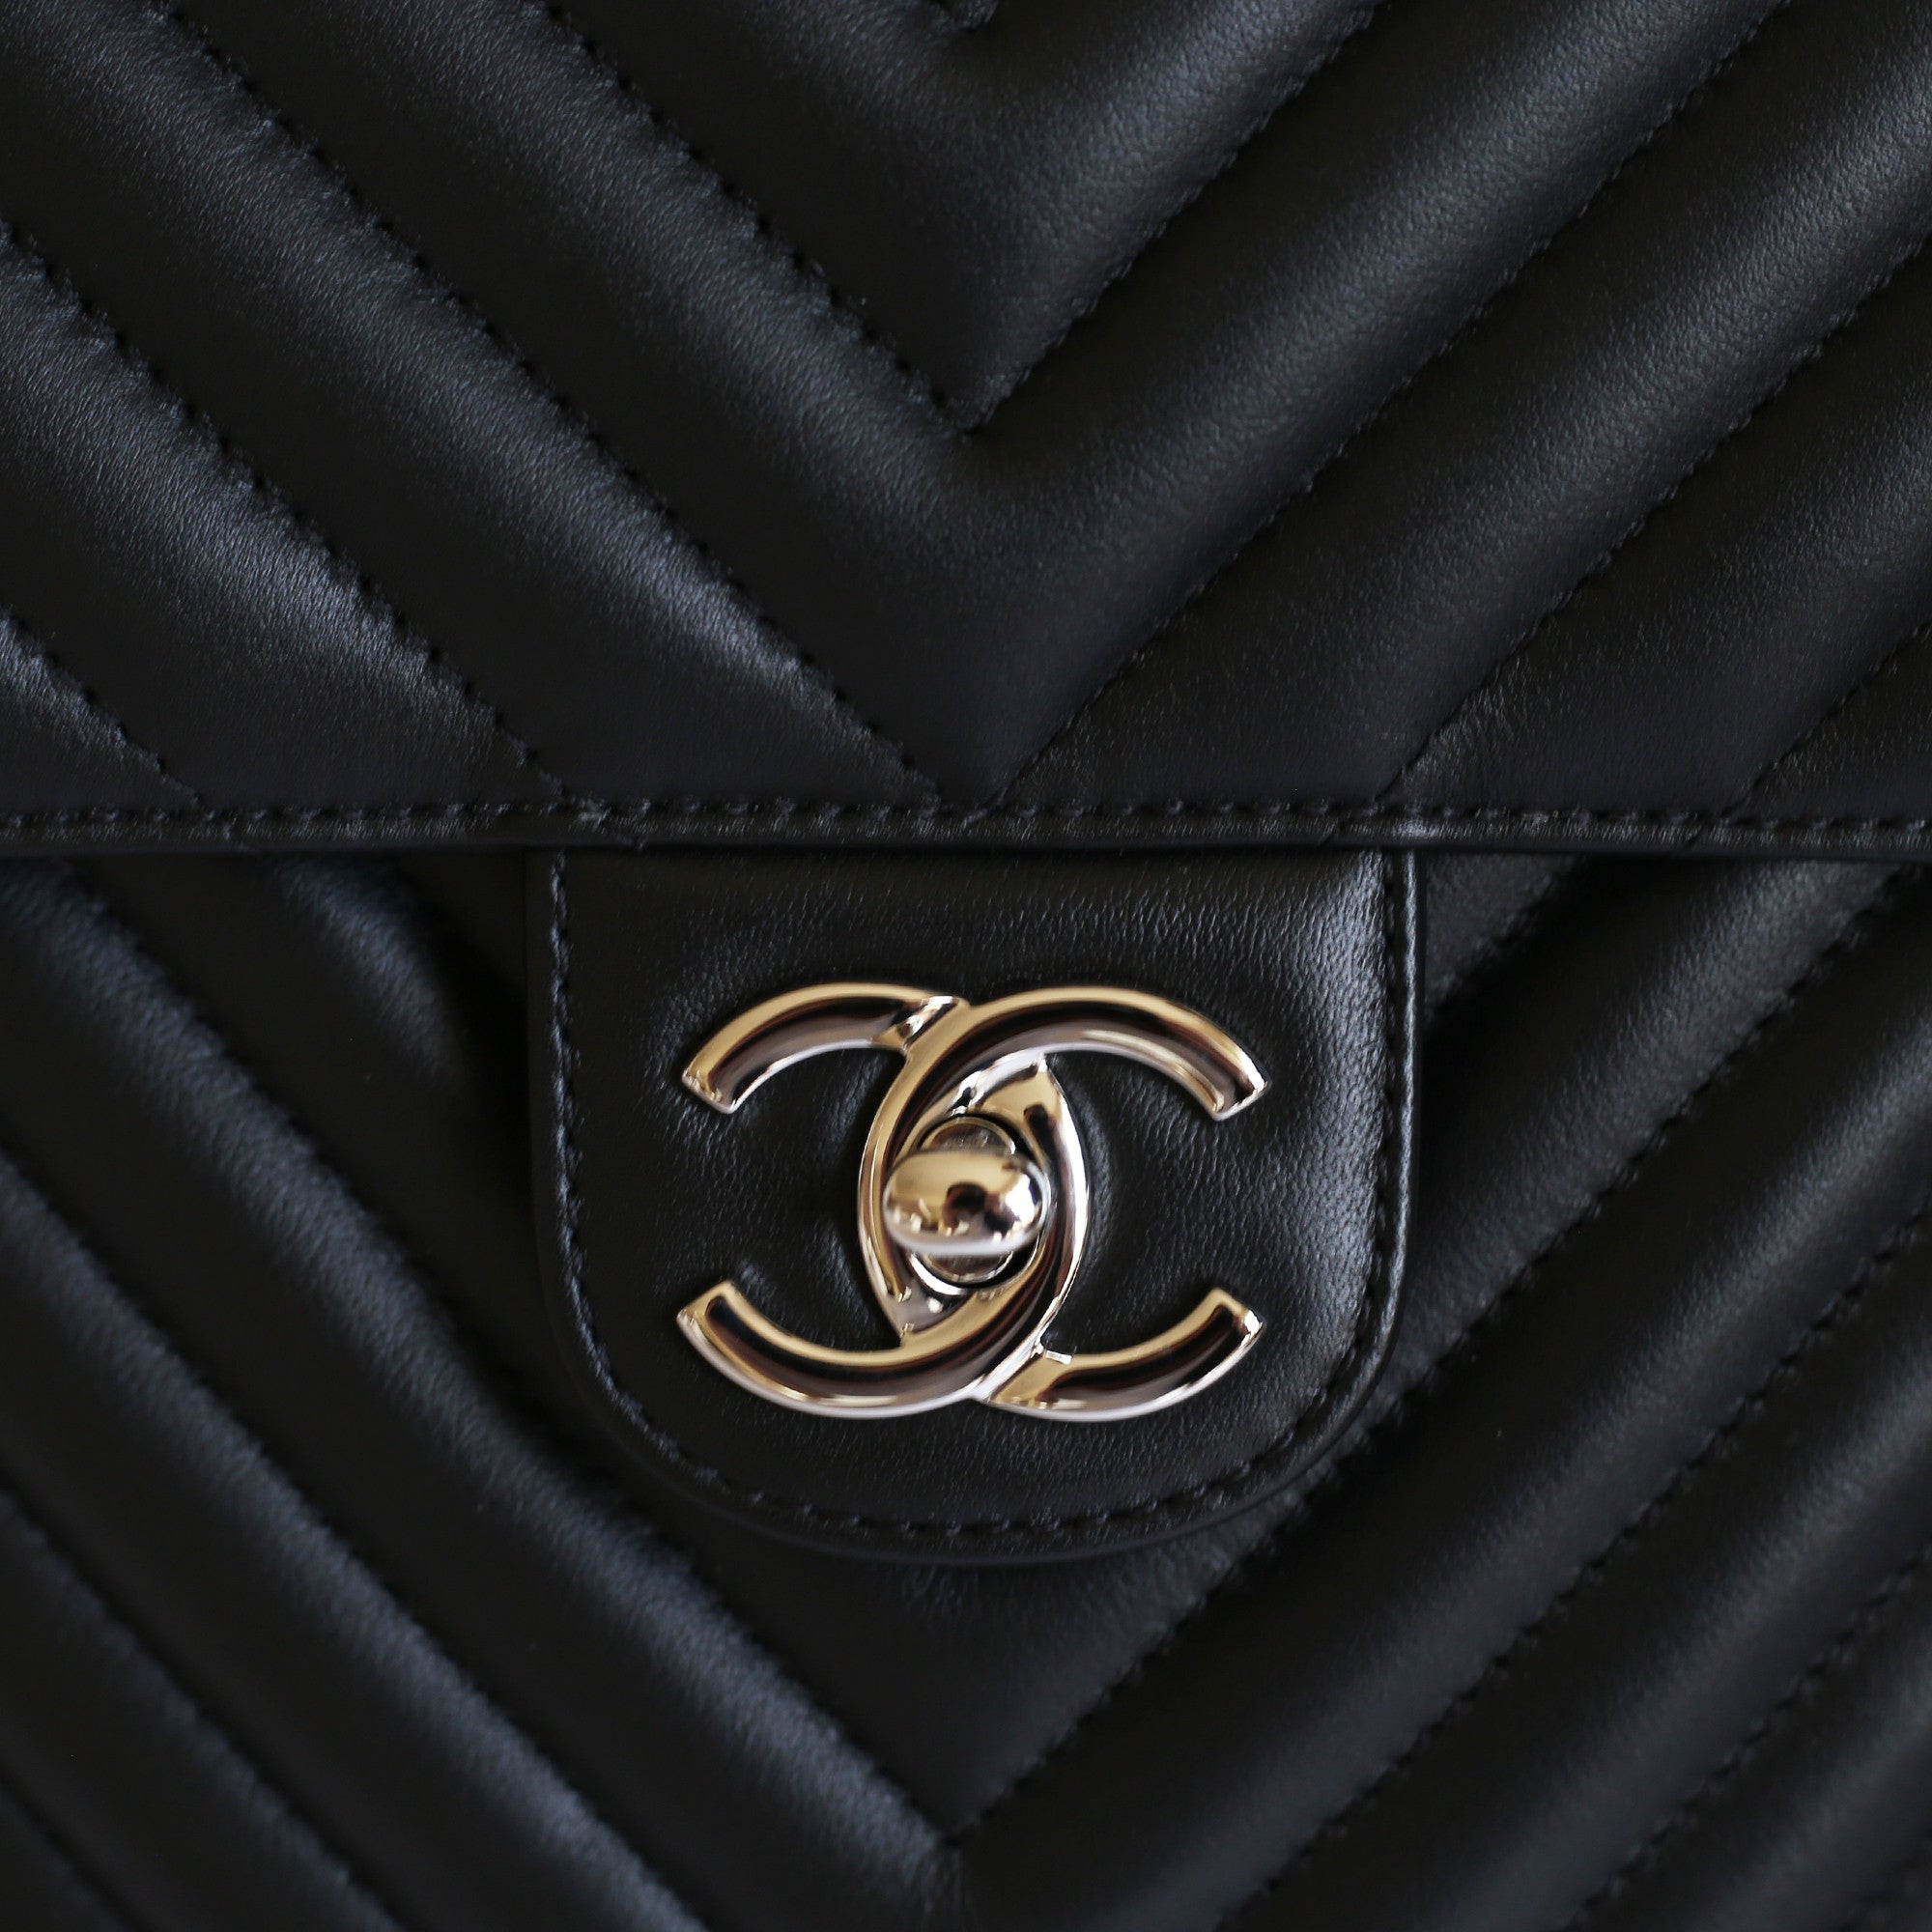 Chanel Chevron Jumbo Rectangular Flap Shoulder Bag